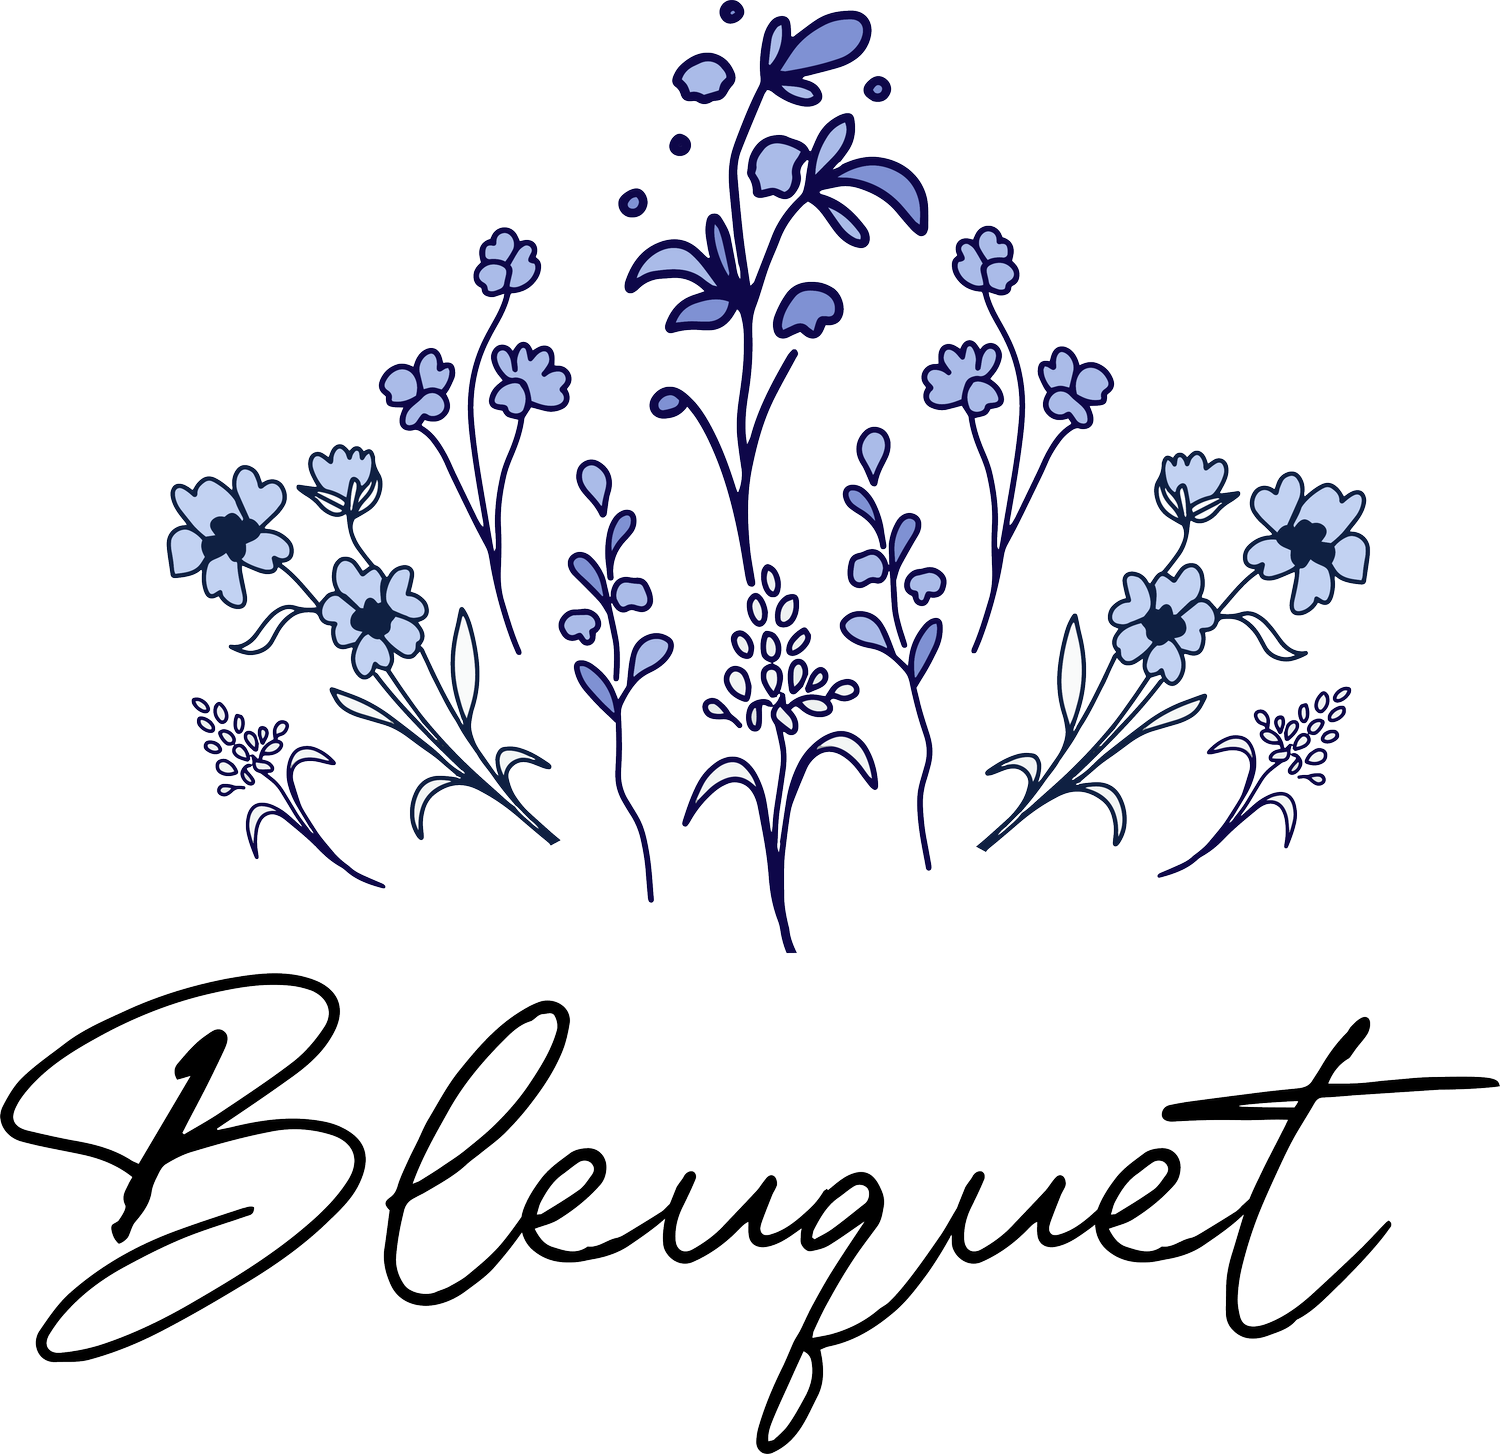 Bleuquet